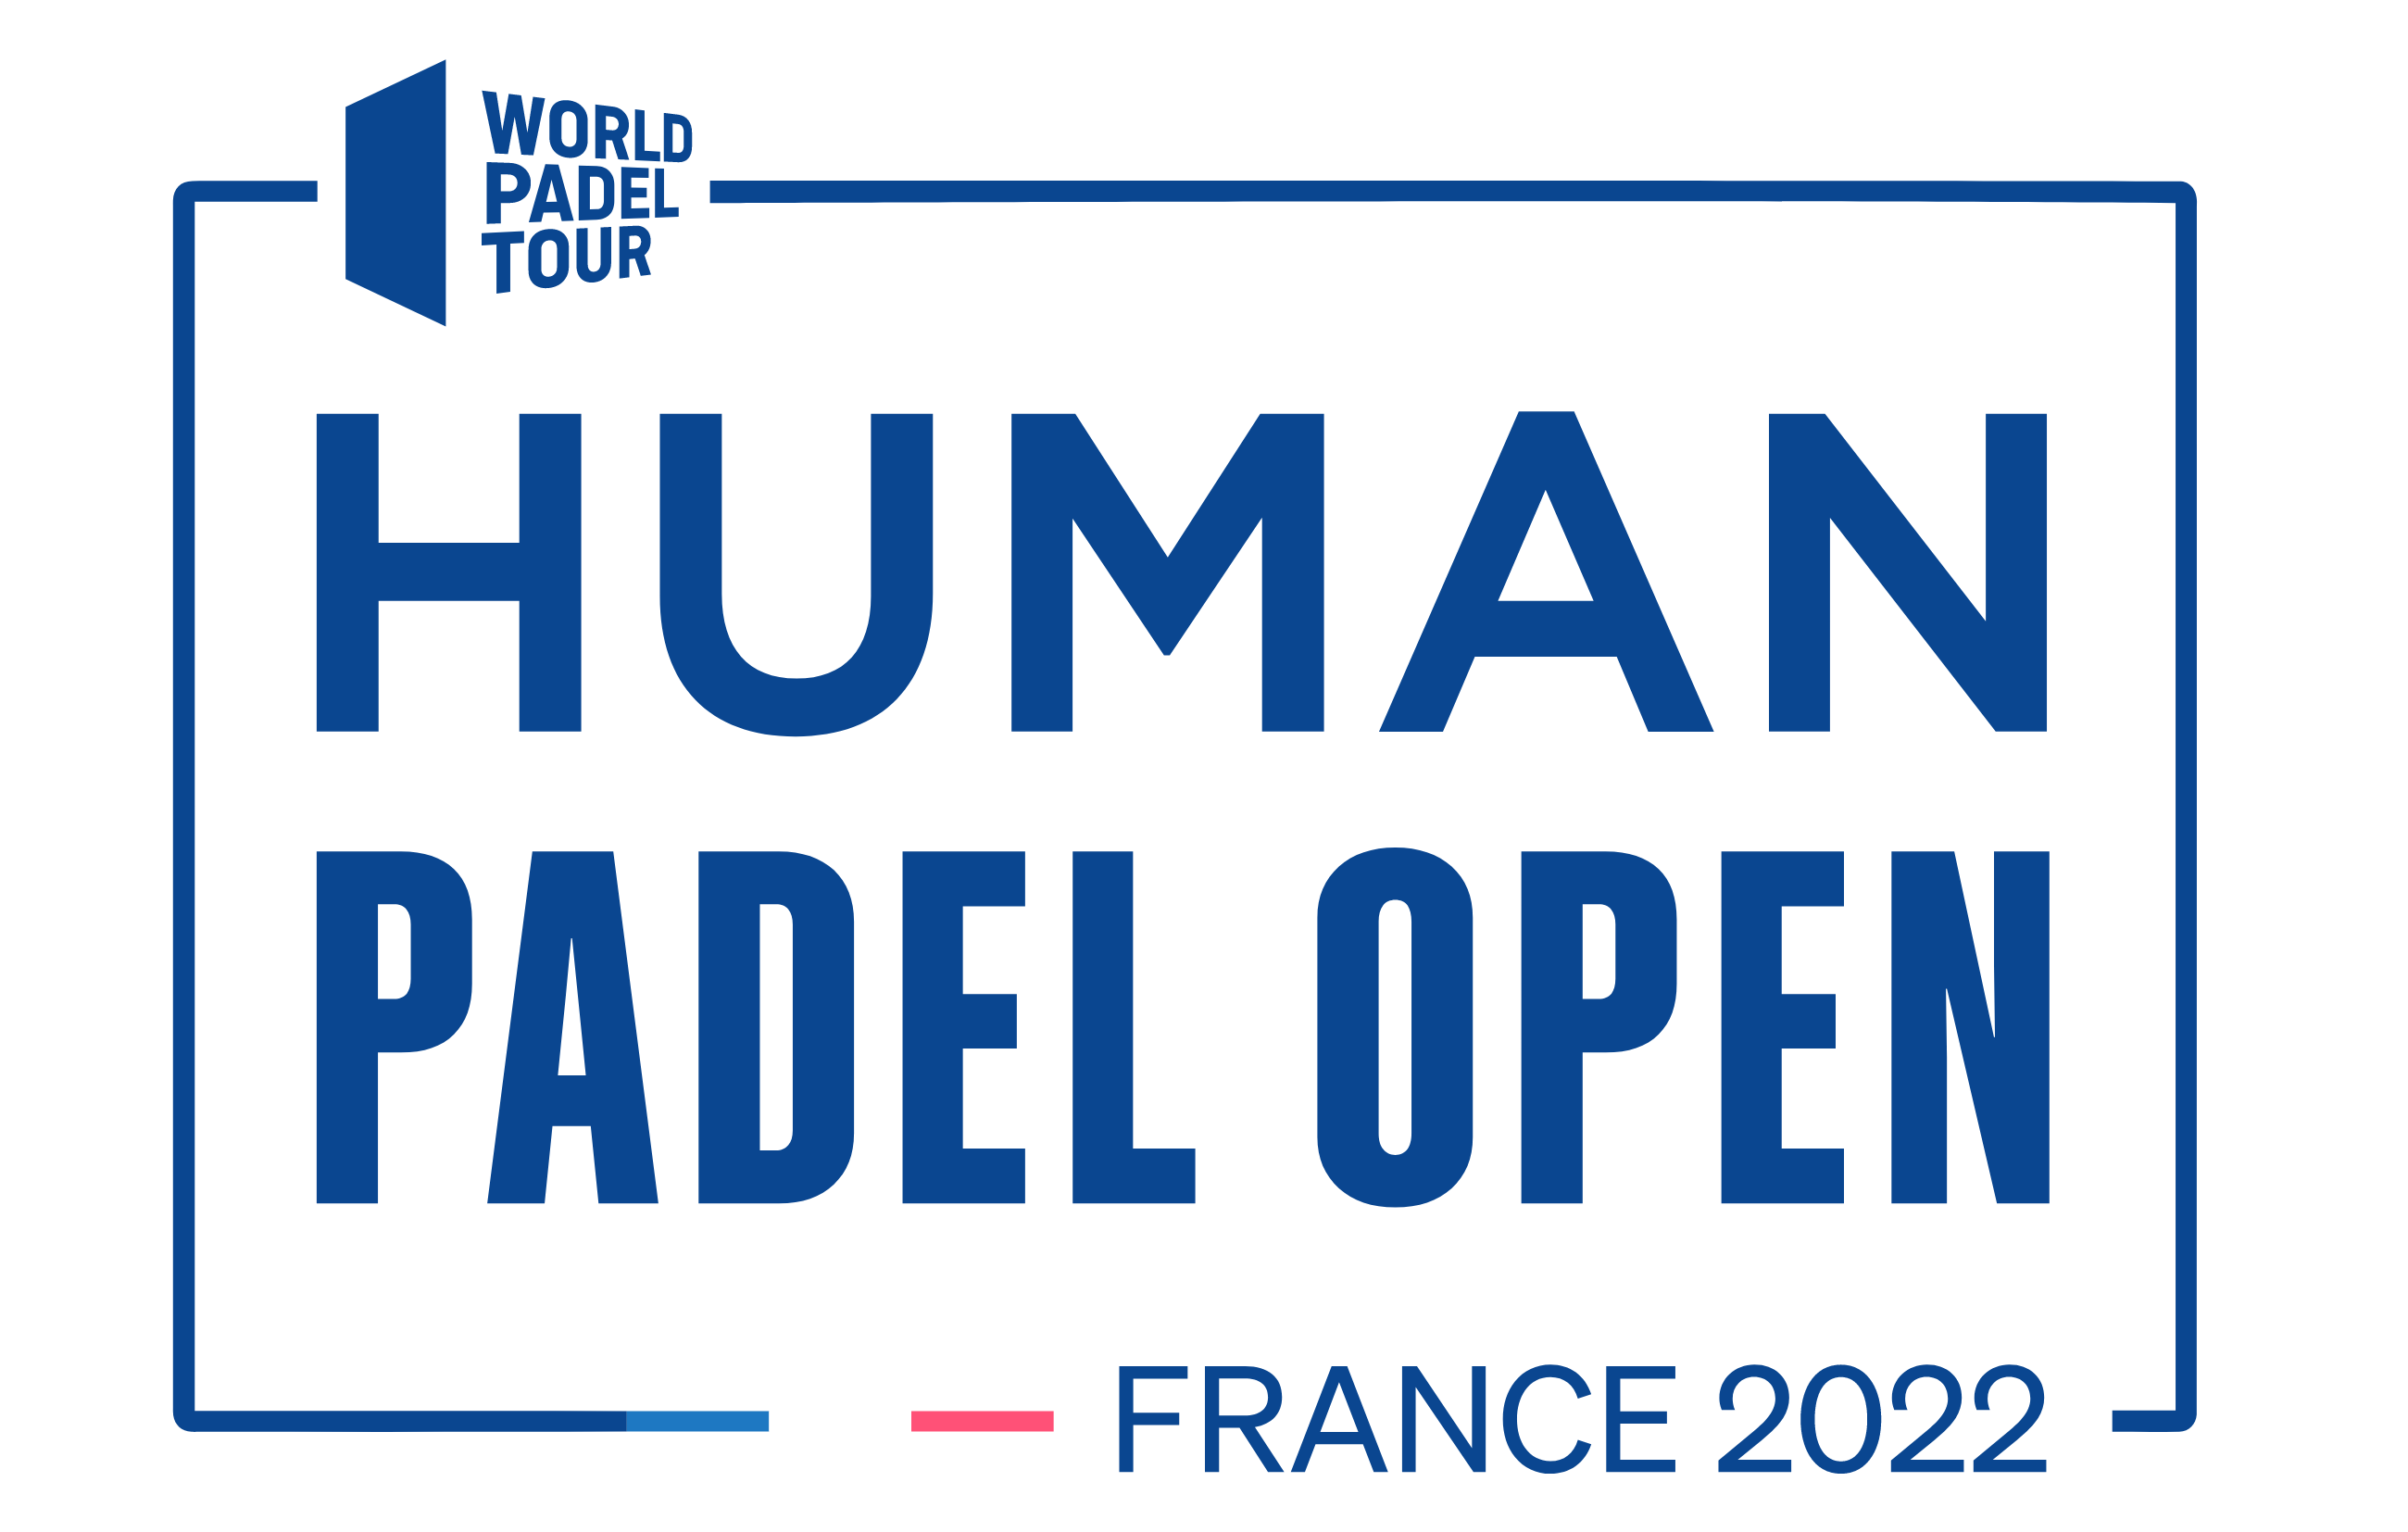 HUMAN PADEL OPEN world padel tour logo